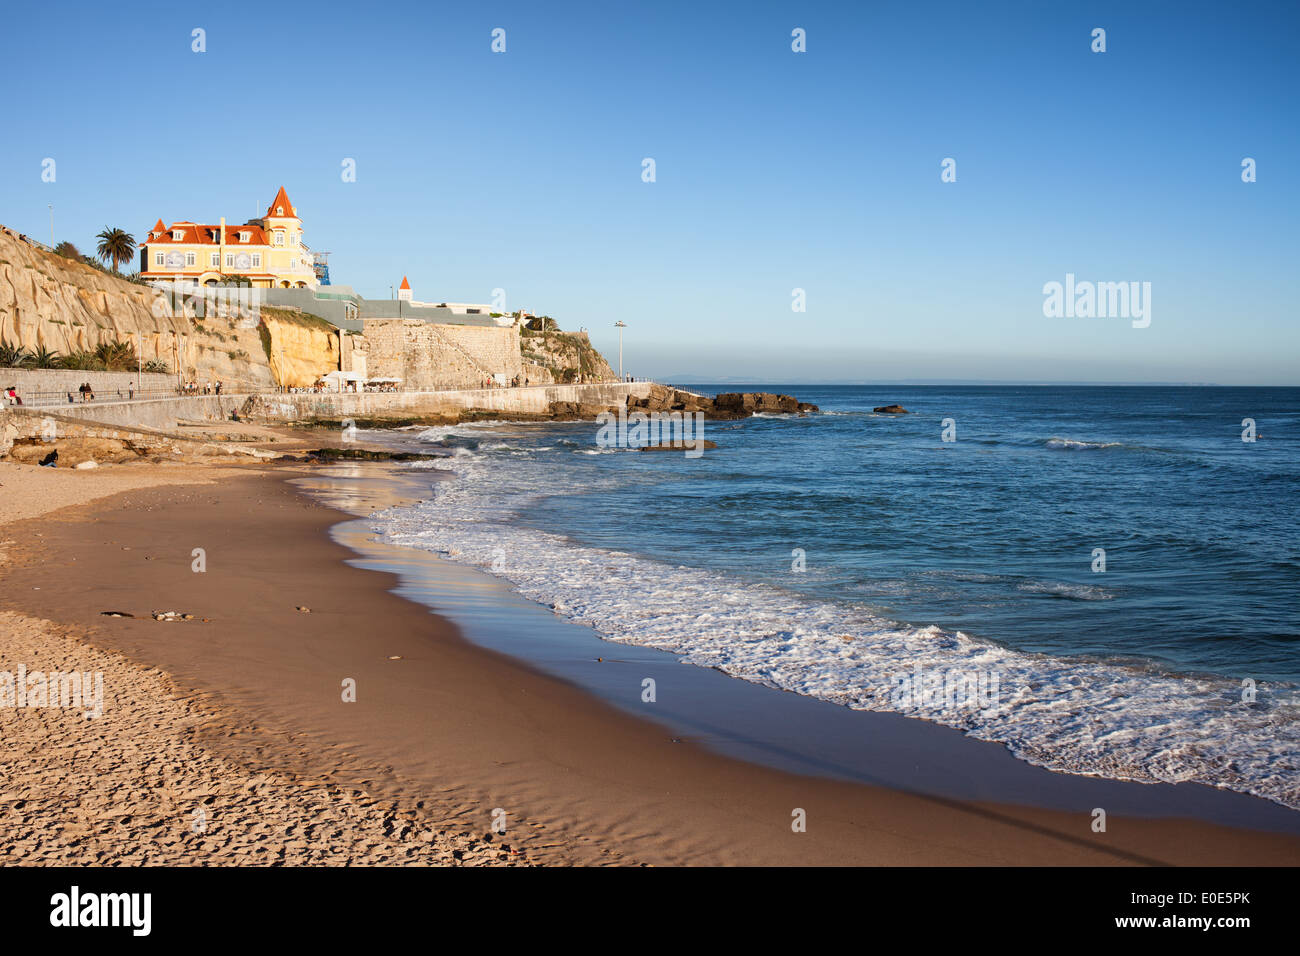 Beach, cliff and promenade along the Atlantic Ocean coast in resort town of Estoril in Portugal. Stock Photo